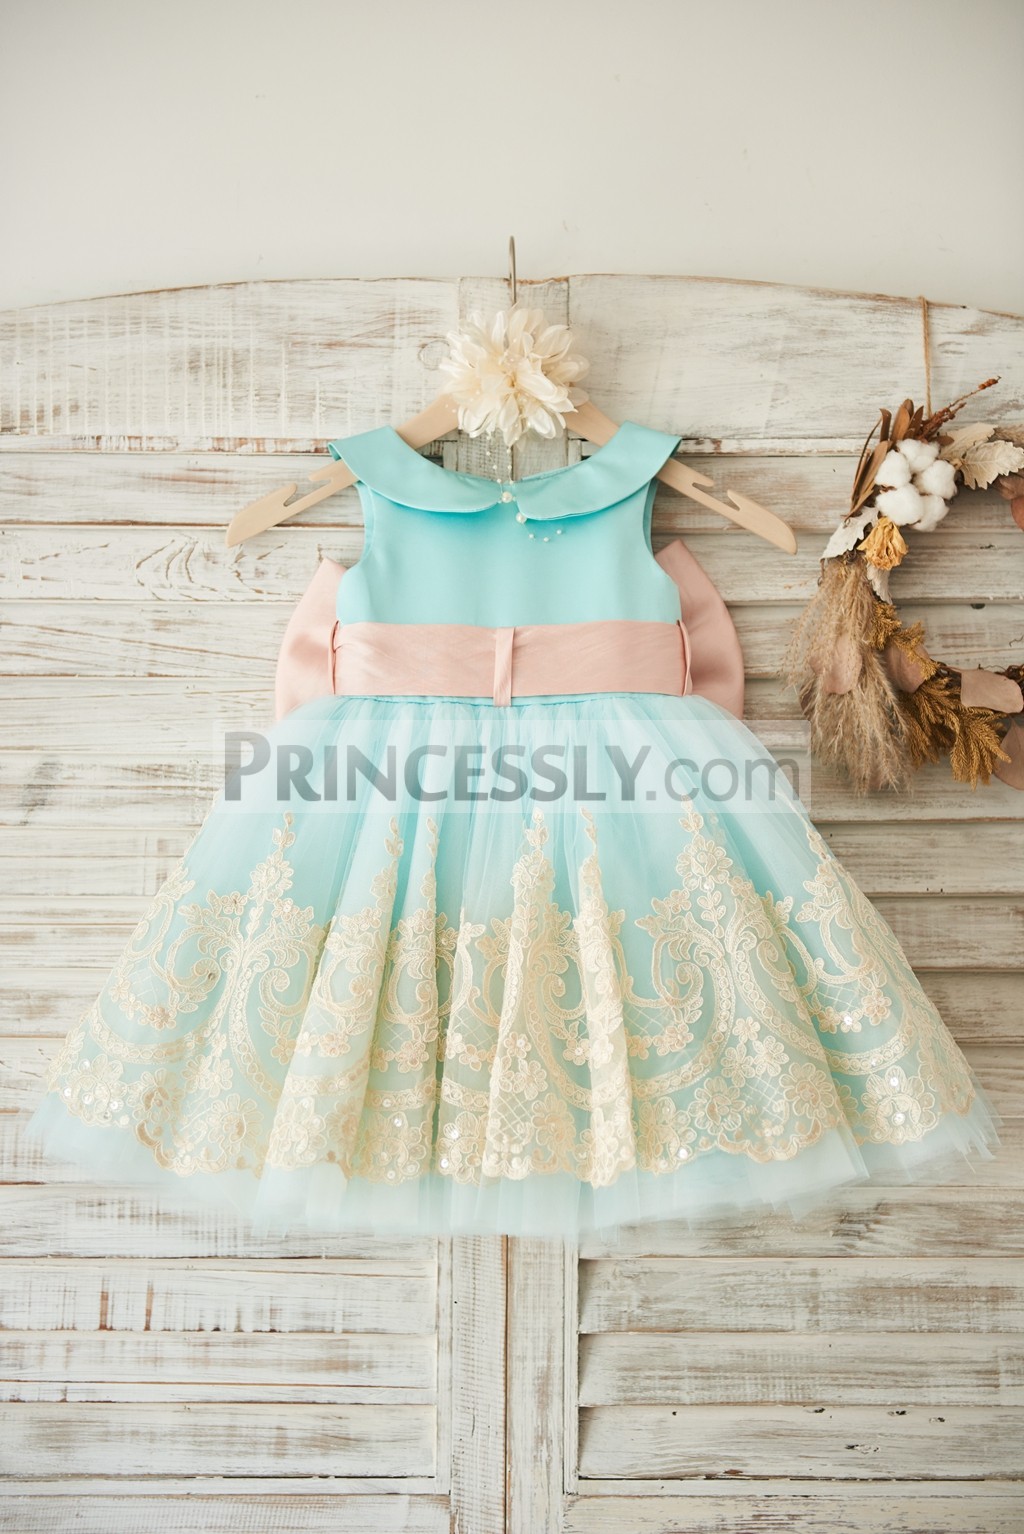 Princessly.com-K1003506-Light Blue Satin Tulle Lace Wedding Flower Girl Dress with Blush Pink Belt/Bow-31